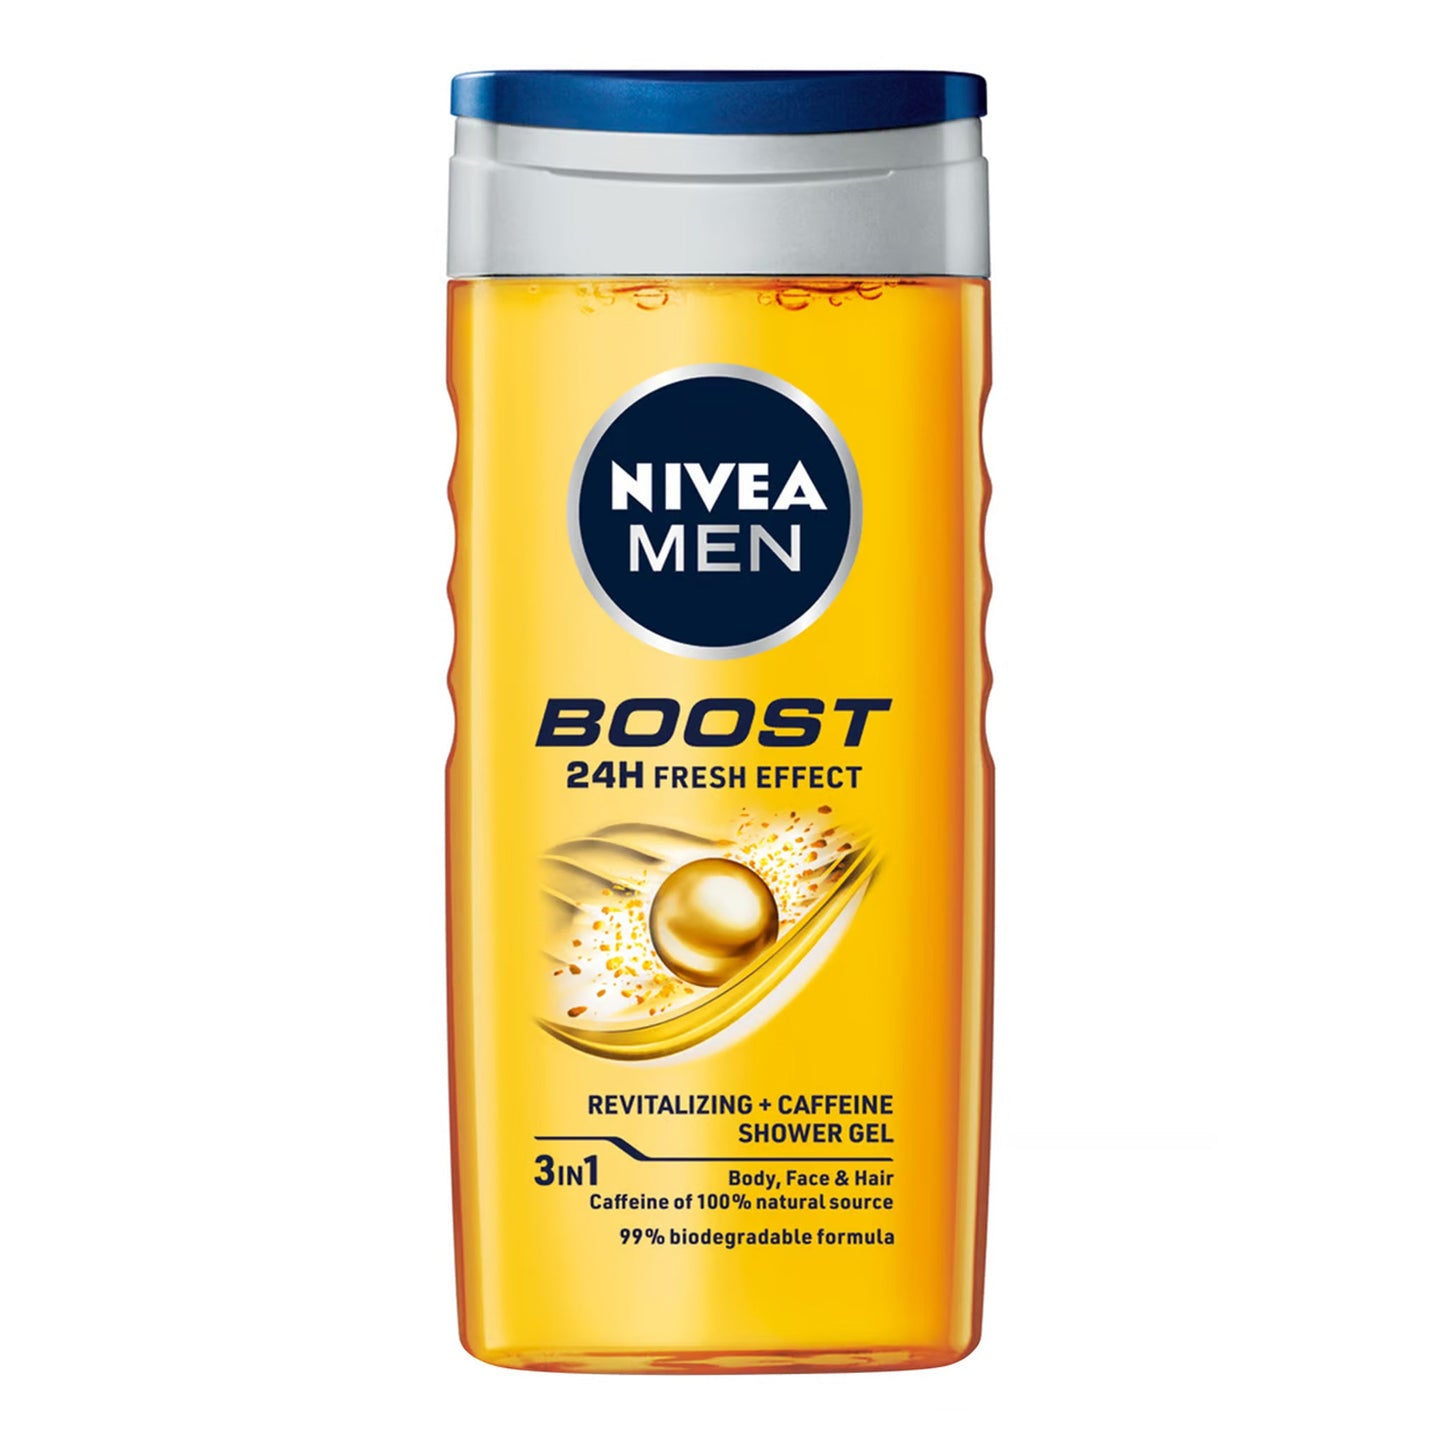 NIVEA MEN - BOOST 24 FRESH EFFECT REVITALIZING + CAFFEINE SHOWER GEL - 250ML